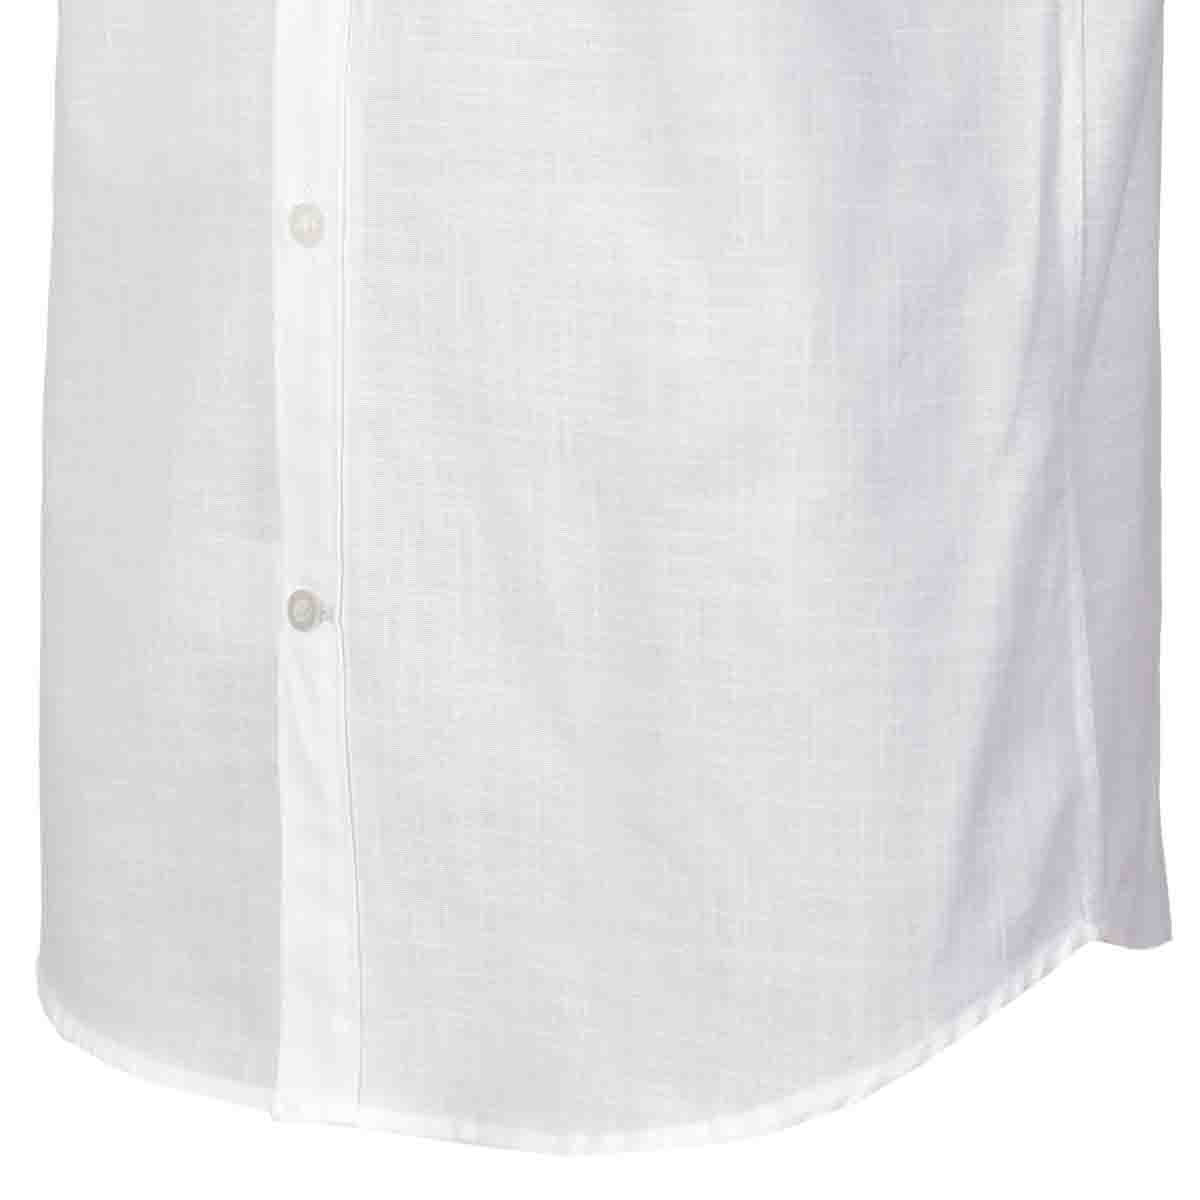 Camisa Manga Corta Casual Maquinilla Blanca Carlo Corinto